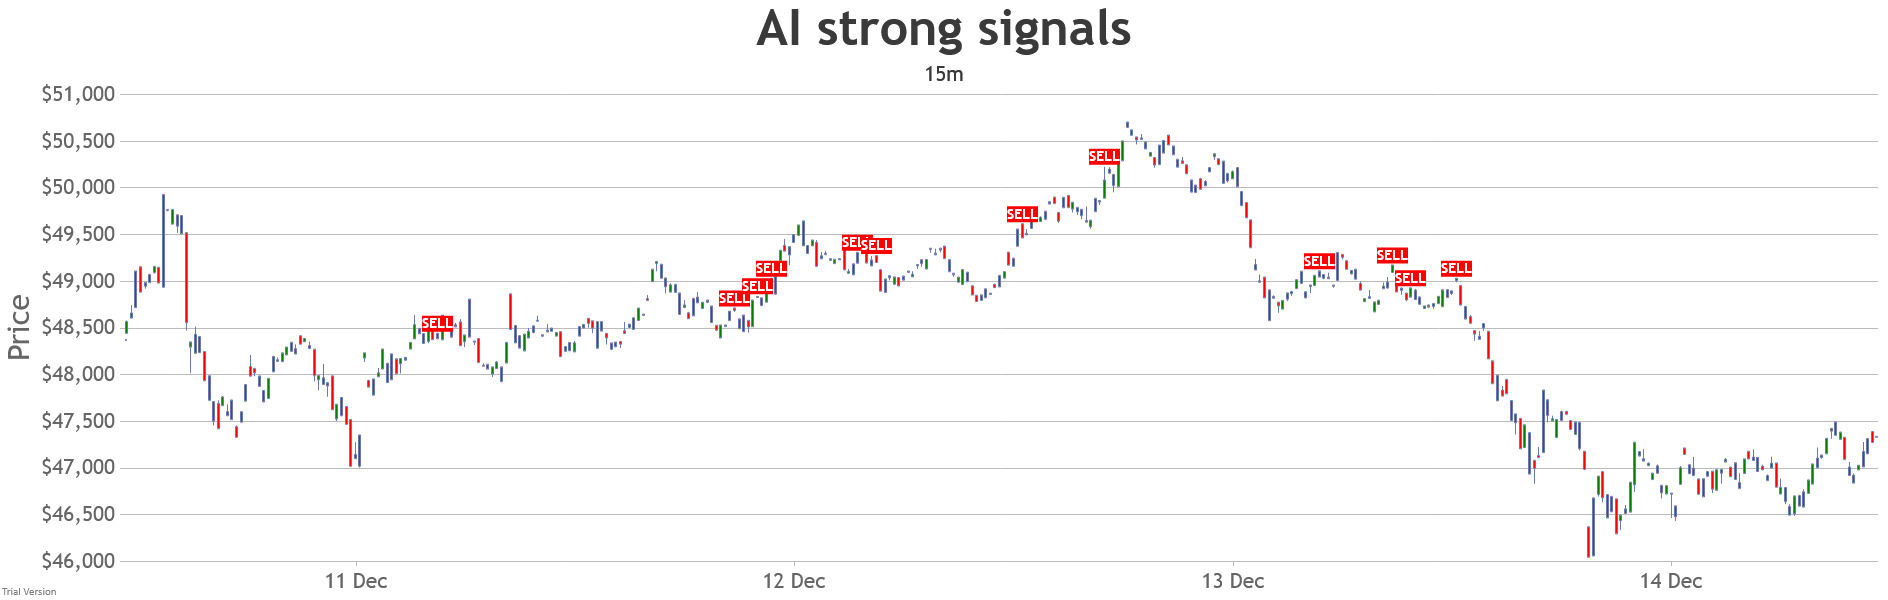 15min-short-range-strong-ai-signals